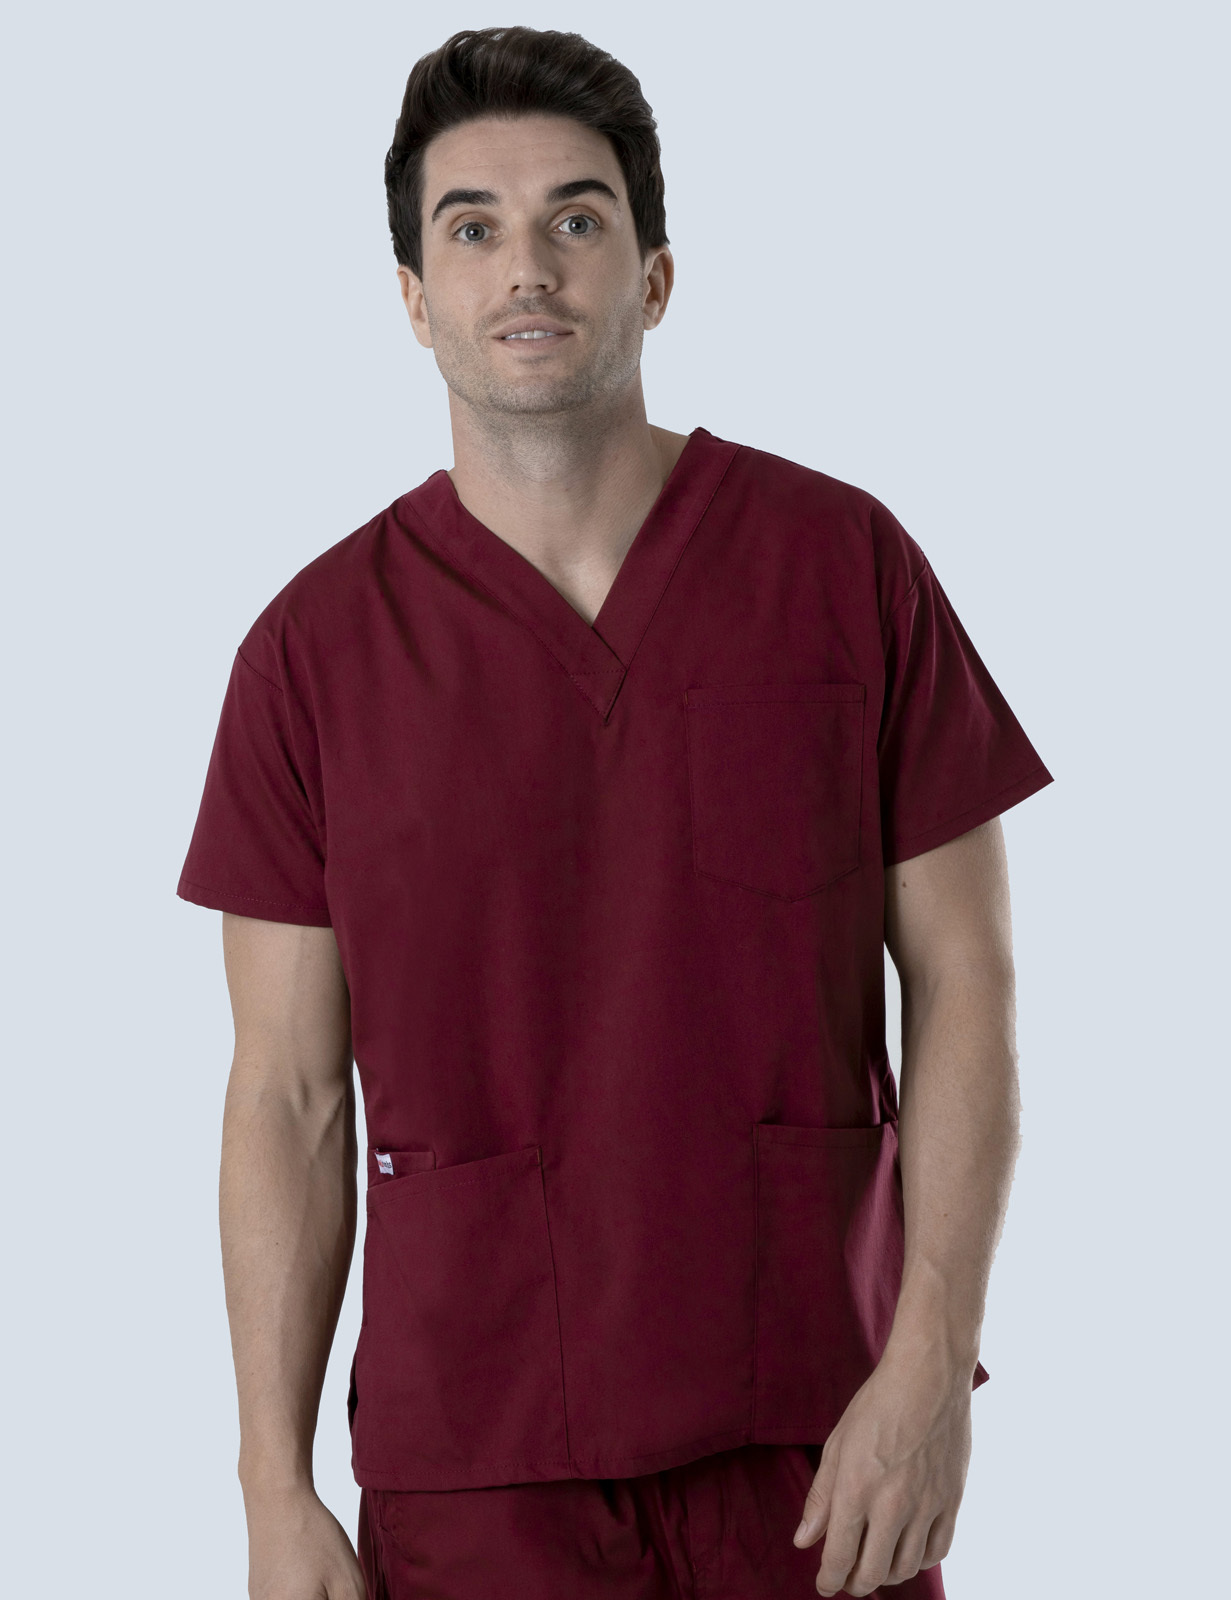 Northern Hospital - ED Nurse (4 Pocket Scrub Top in Burgundy incl Logos)